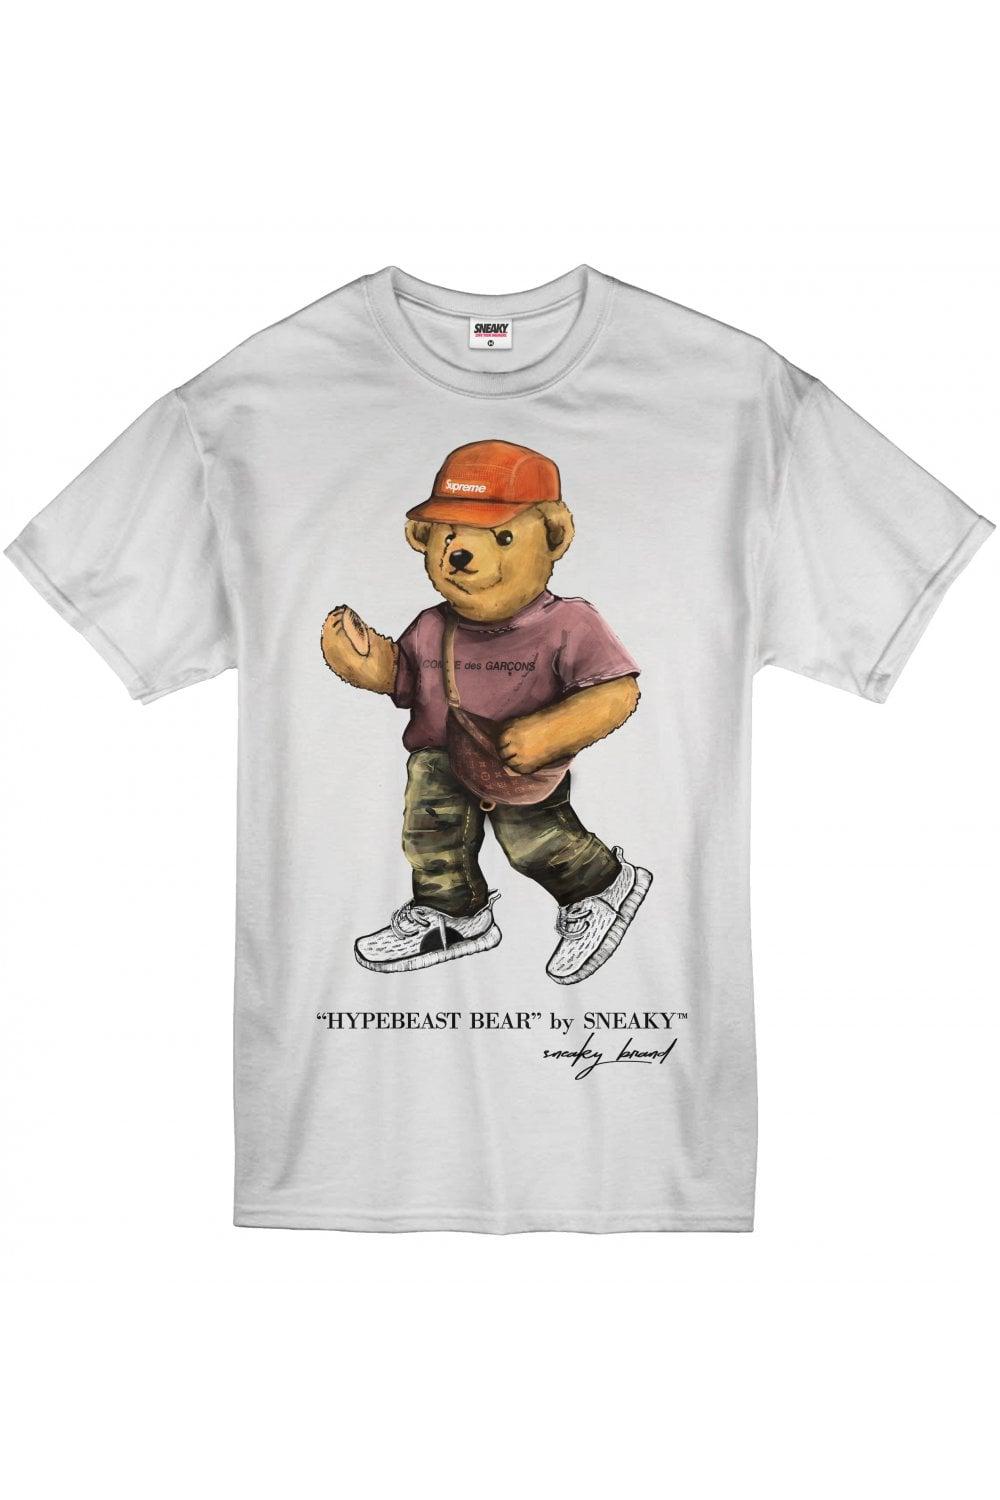 Hypebeast Bear Logo - Sneaky EXCLUSIVE Hypebeast Bear T-shirt - Shop from Sneaky UK